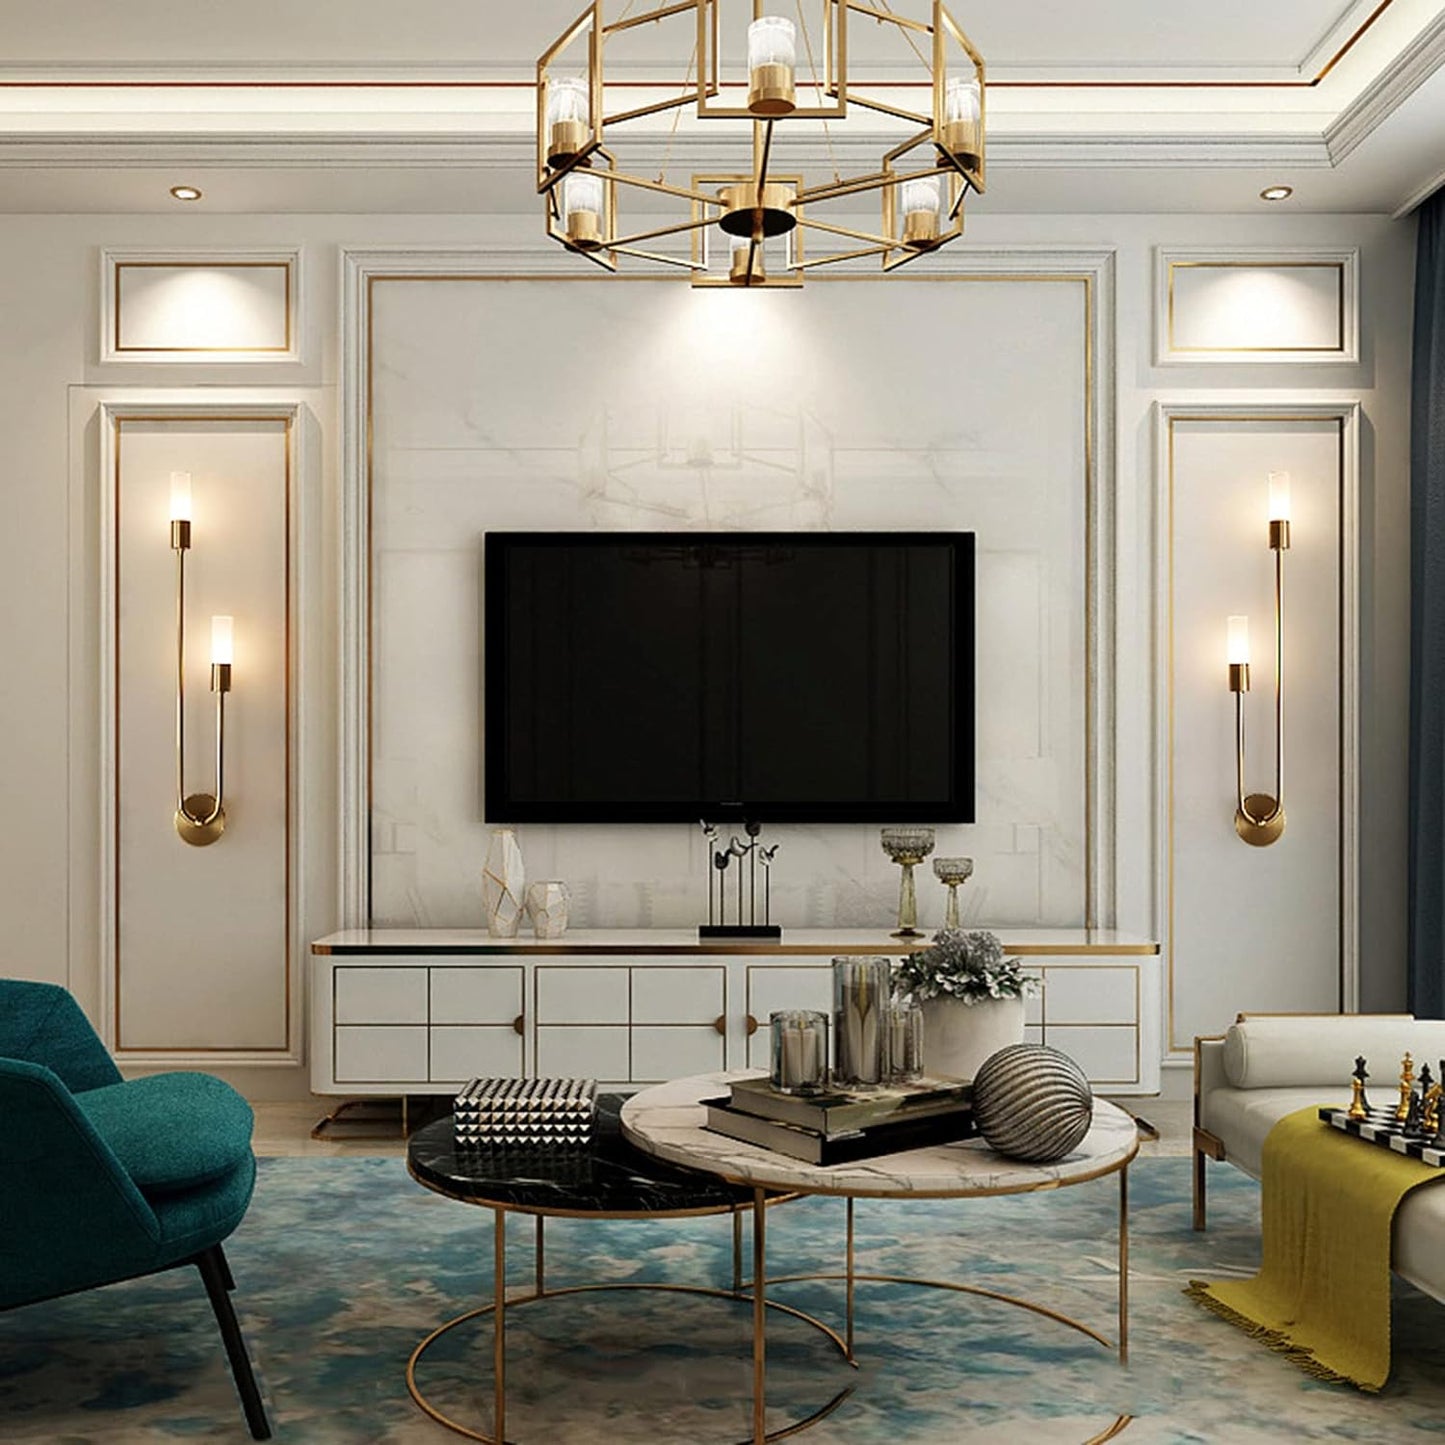 Ahuja International Lightweight Luxury Brass Bedside Lamp for Living Room, Bedroom and Hallway. Deciorative Wall Light, Modern Crystal Wall Lights.